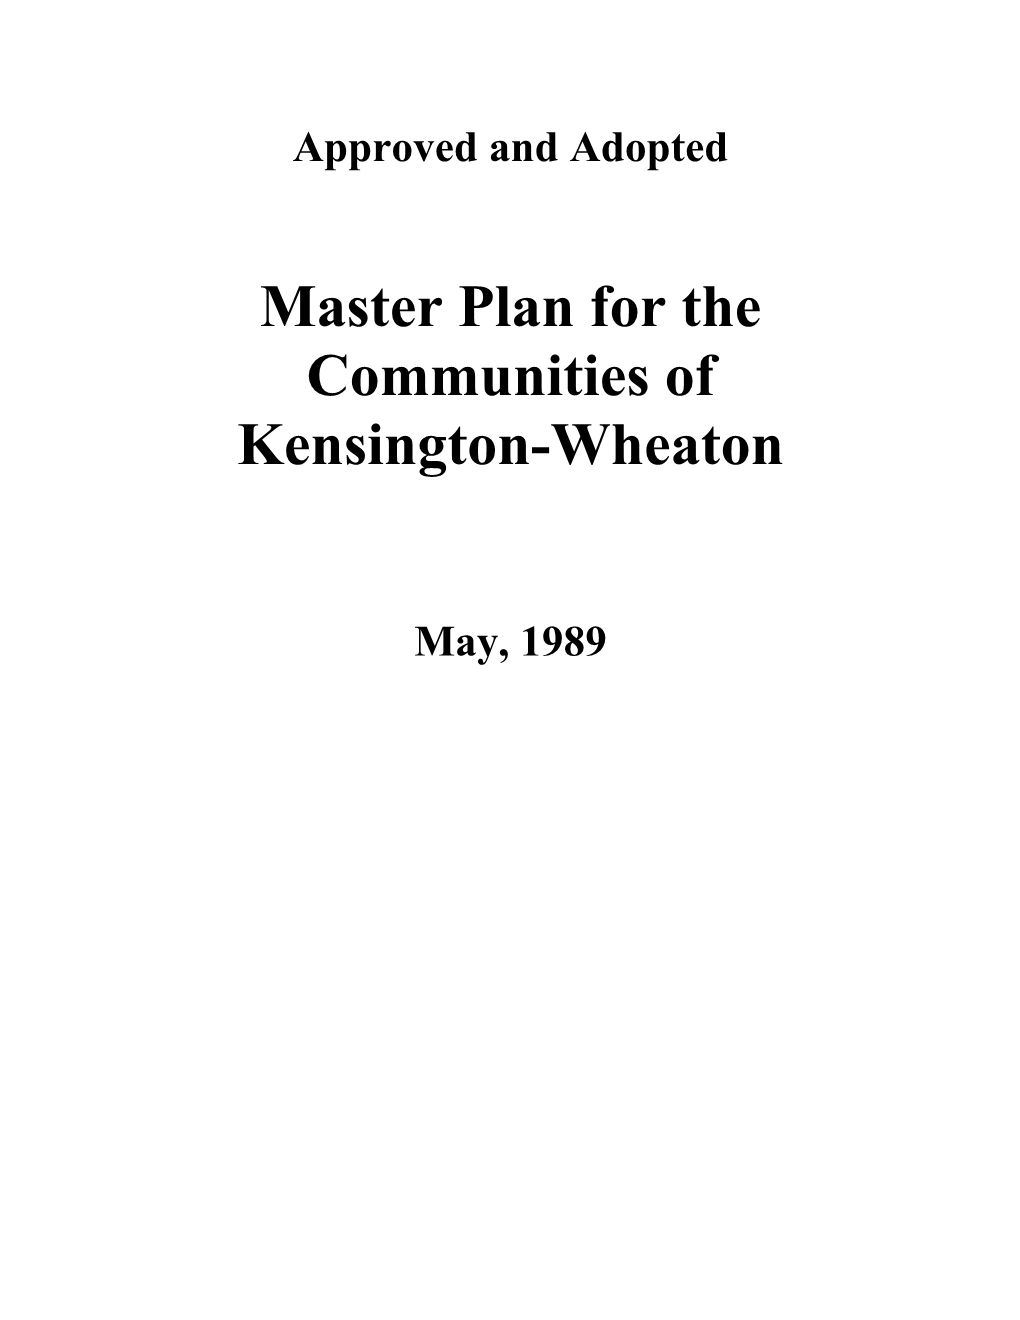 Master Plan for the Communities of Kensington-Wheaton